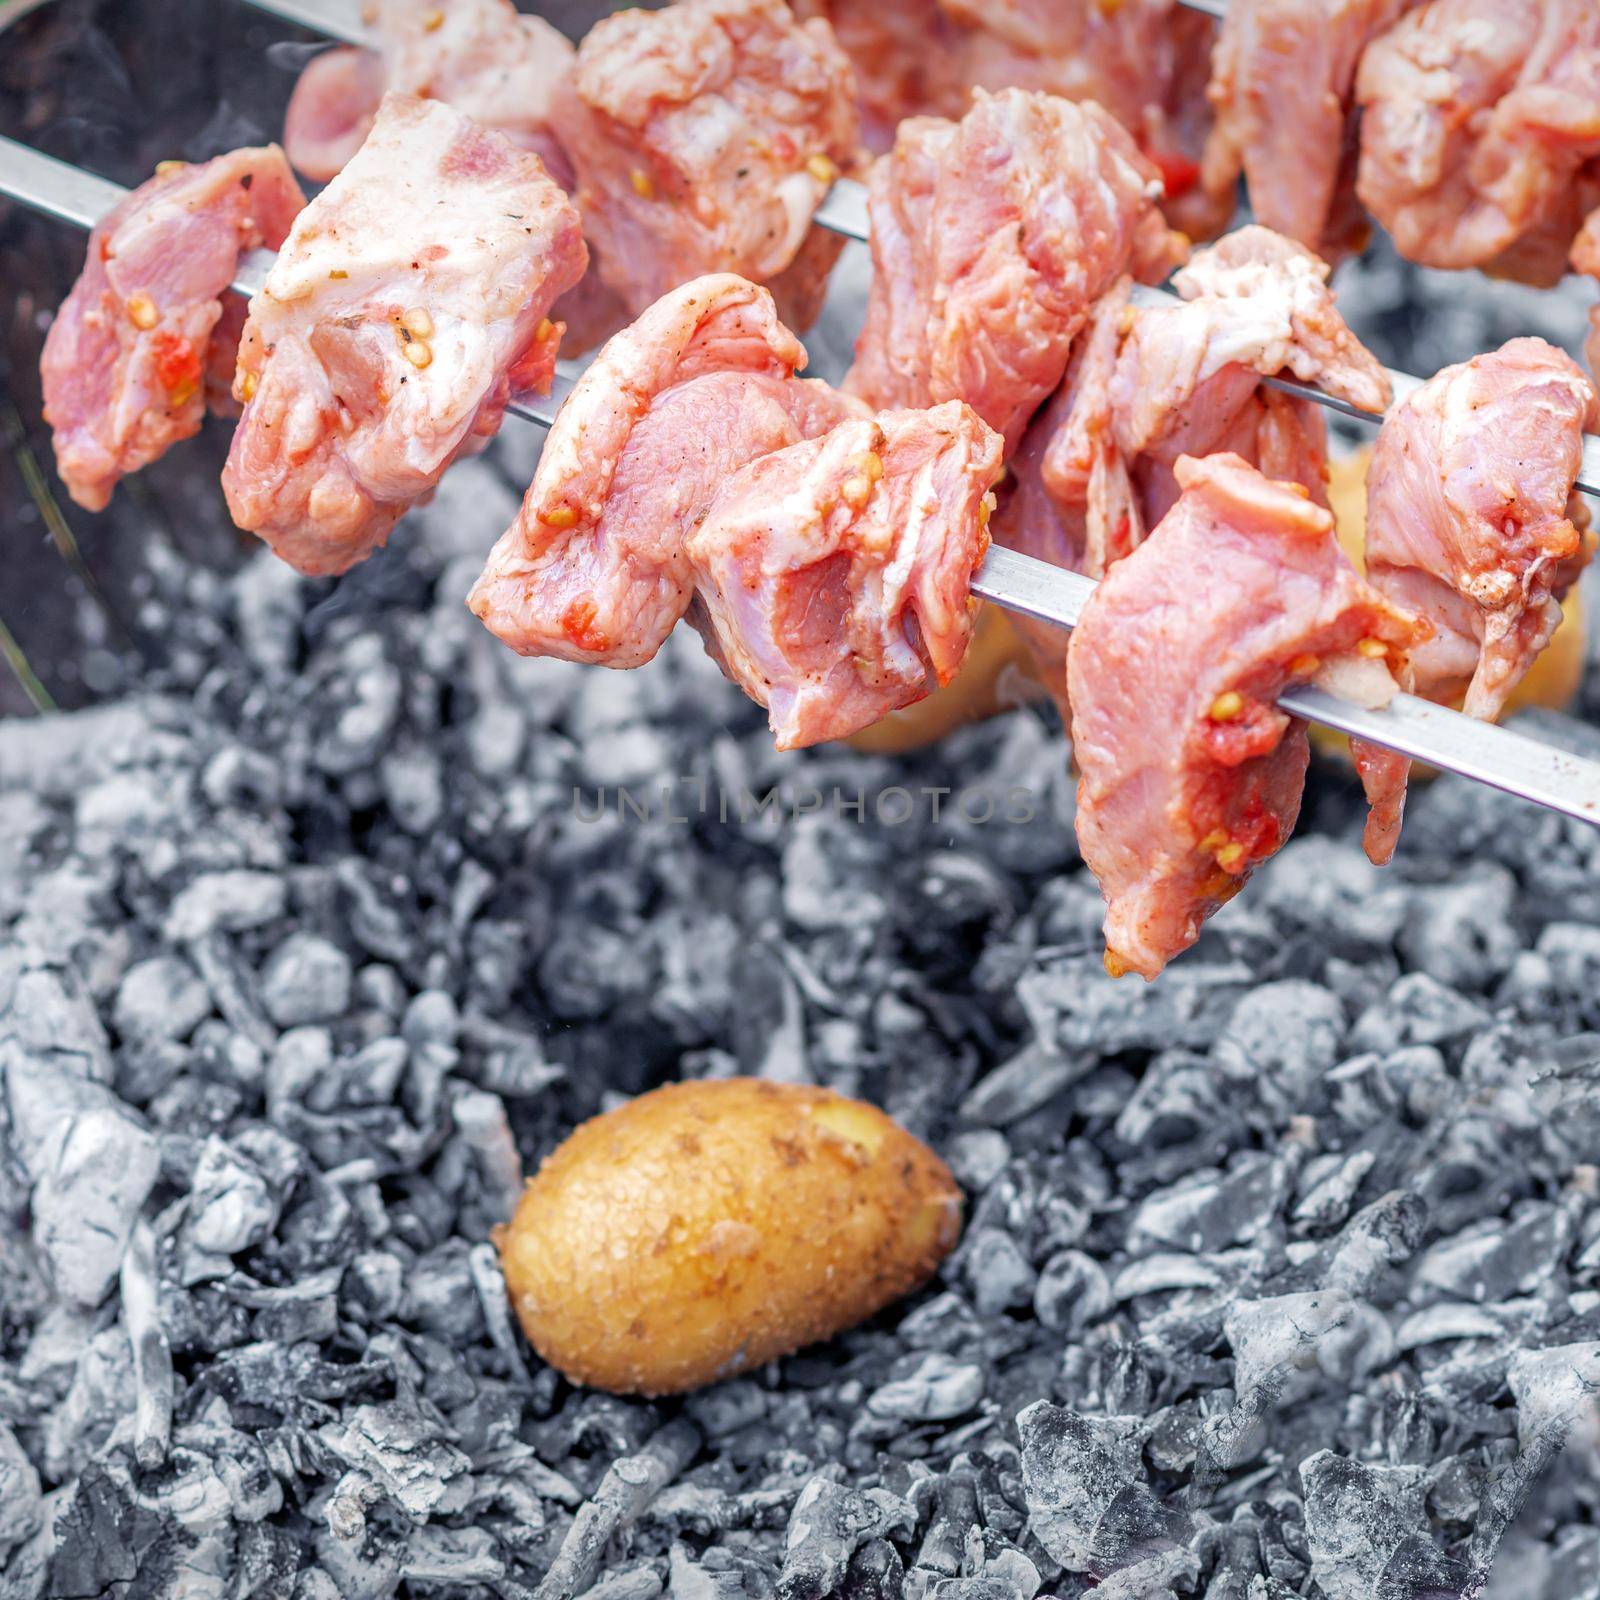 Man prepares barbecue meat with potatoes by okskukuruza